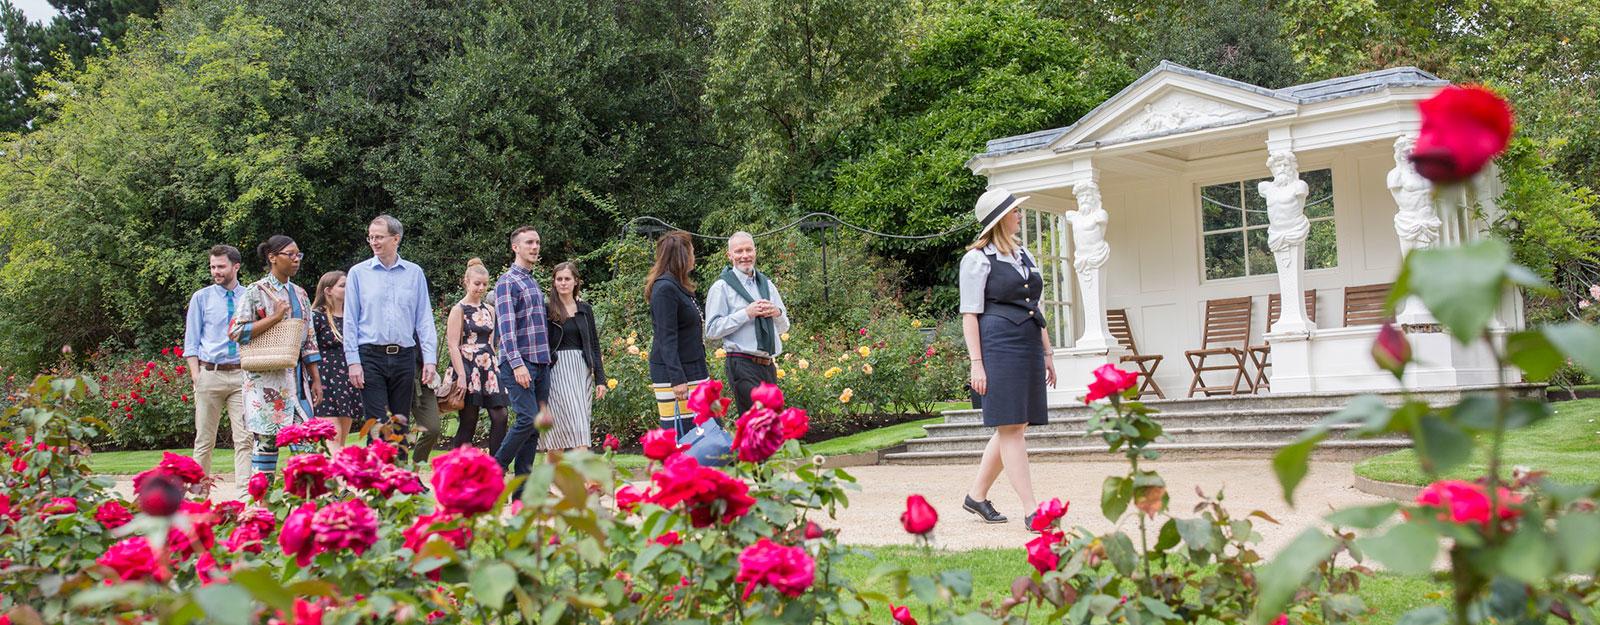 Garden Highlights Tour at Buckingham Palace